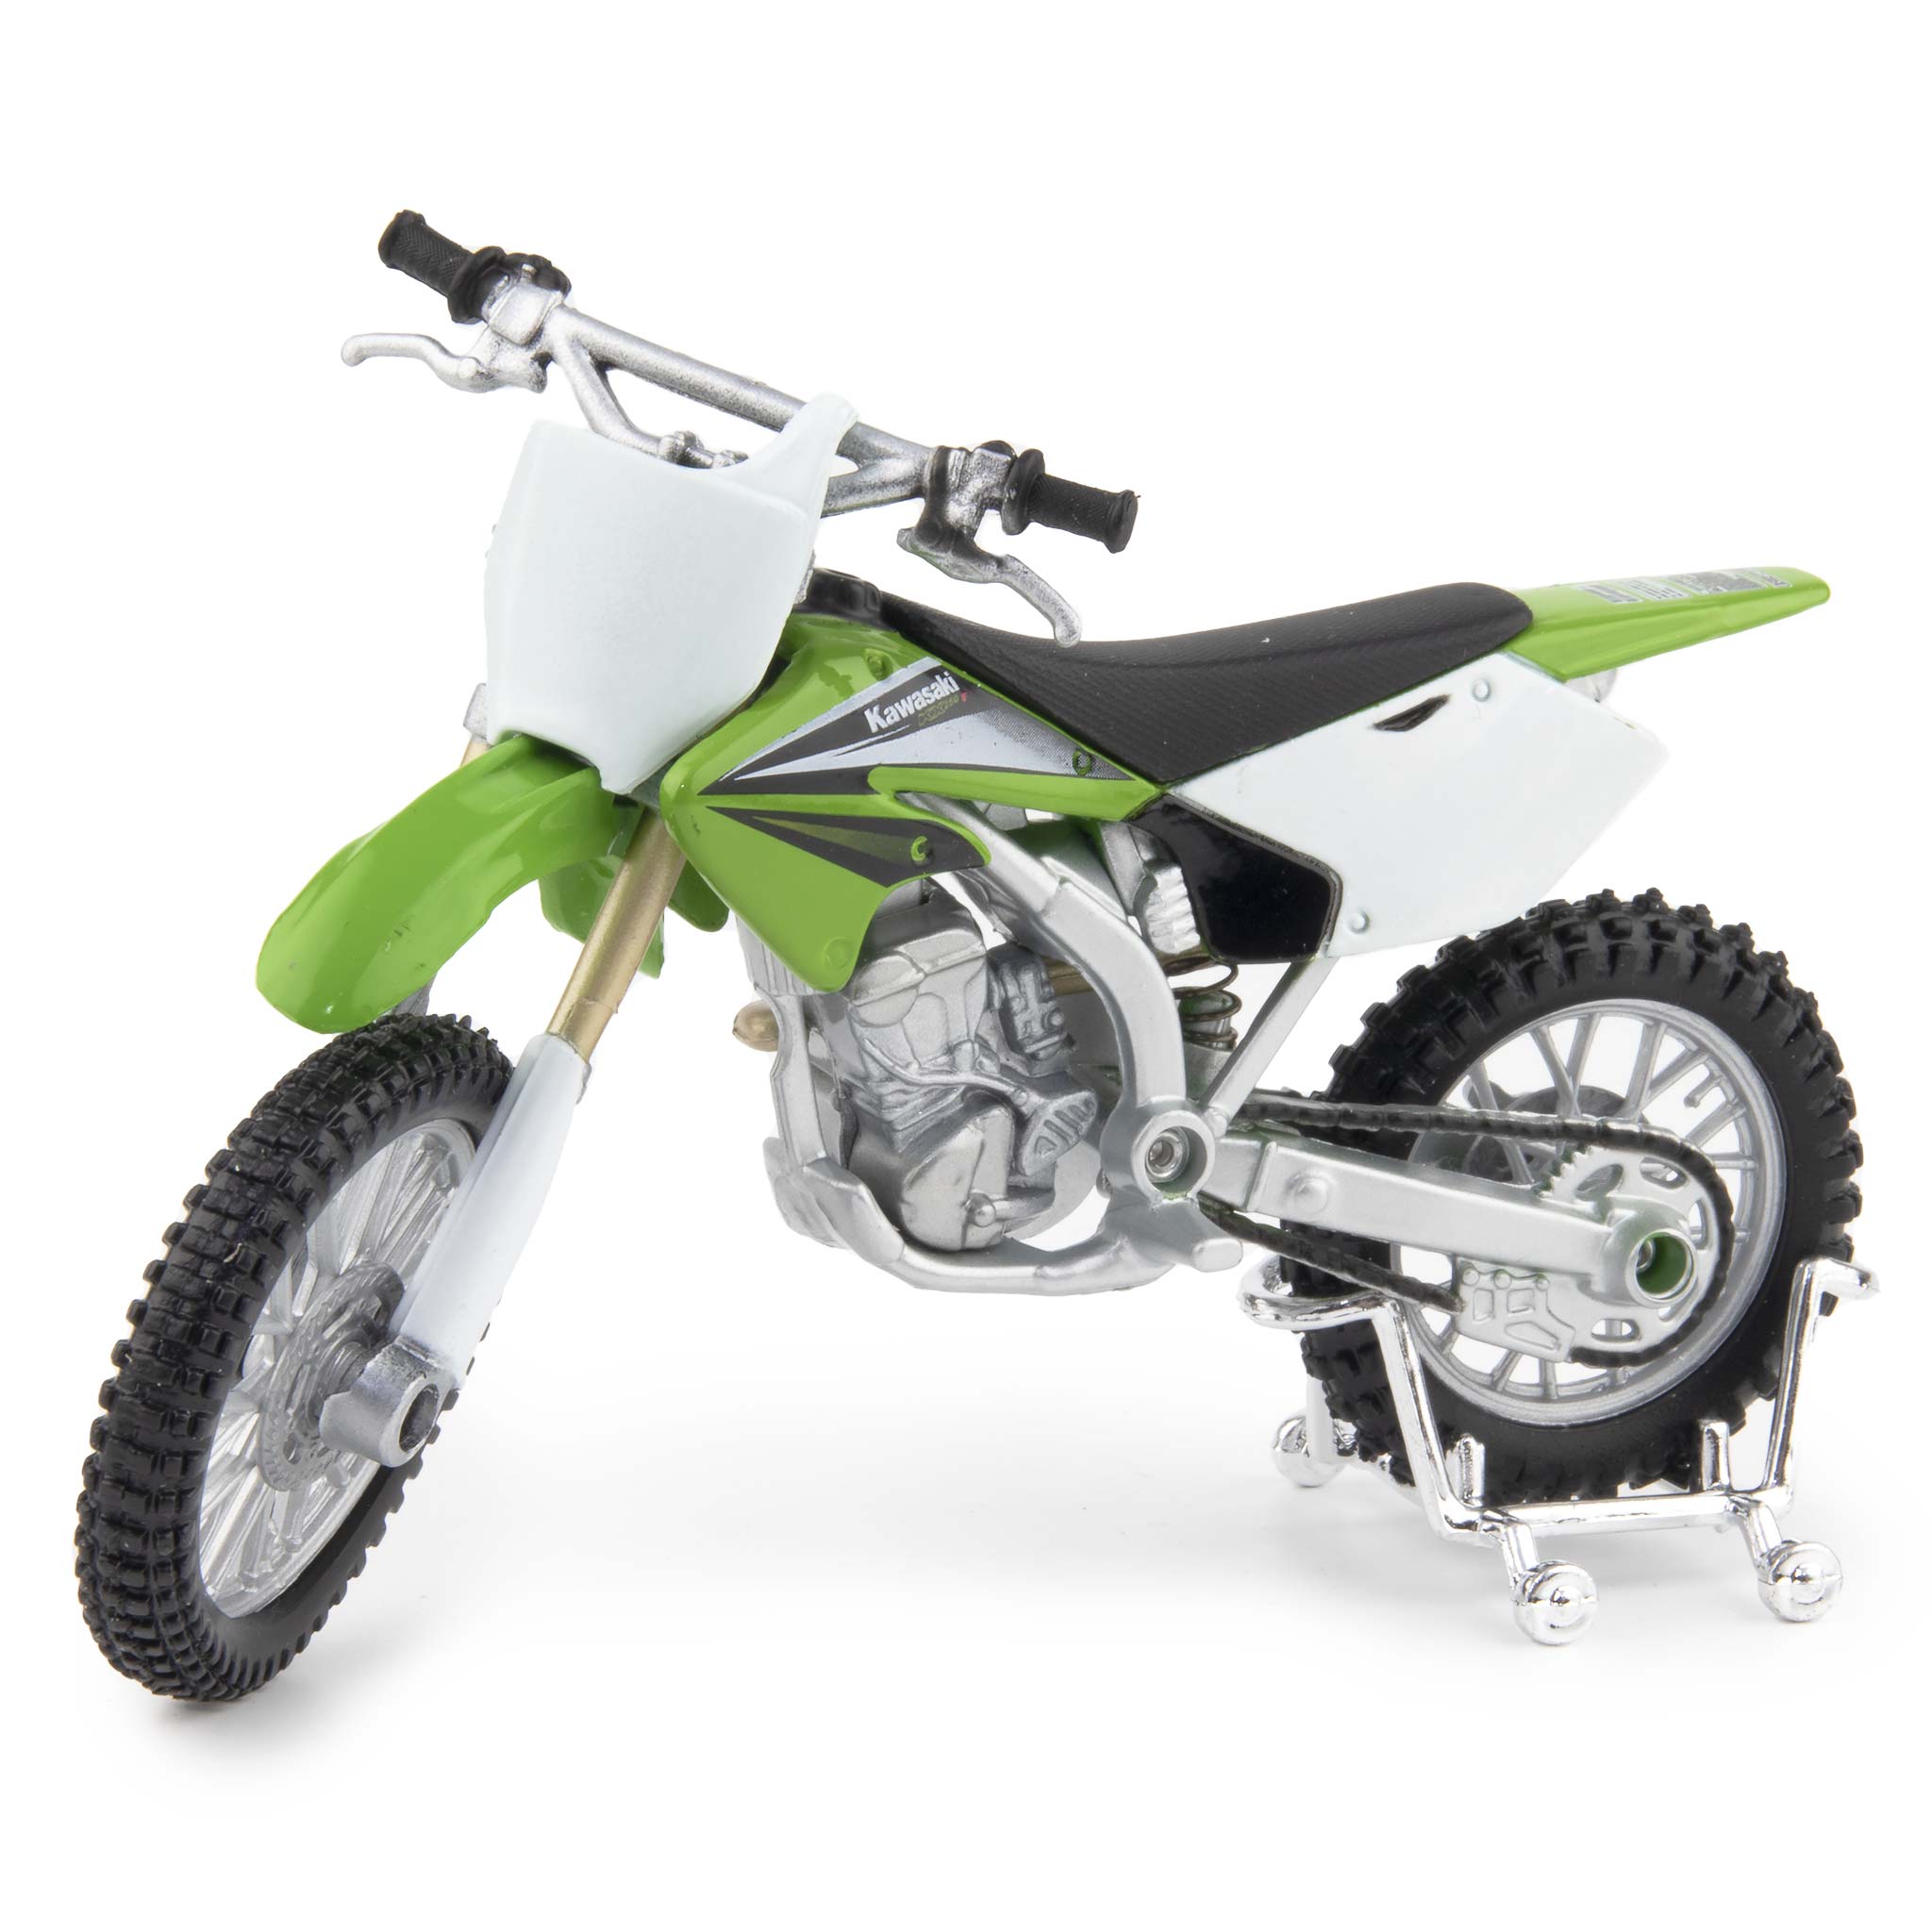 Kawasaki KX250F green - 1:18 Scale Diecast Model Motorcycle-Maisto-Diecast Model Centre